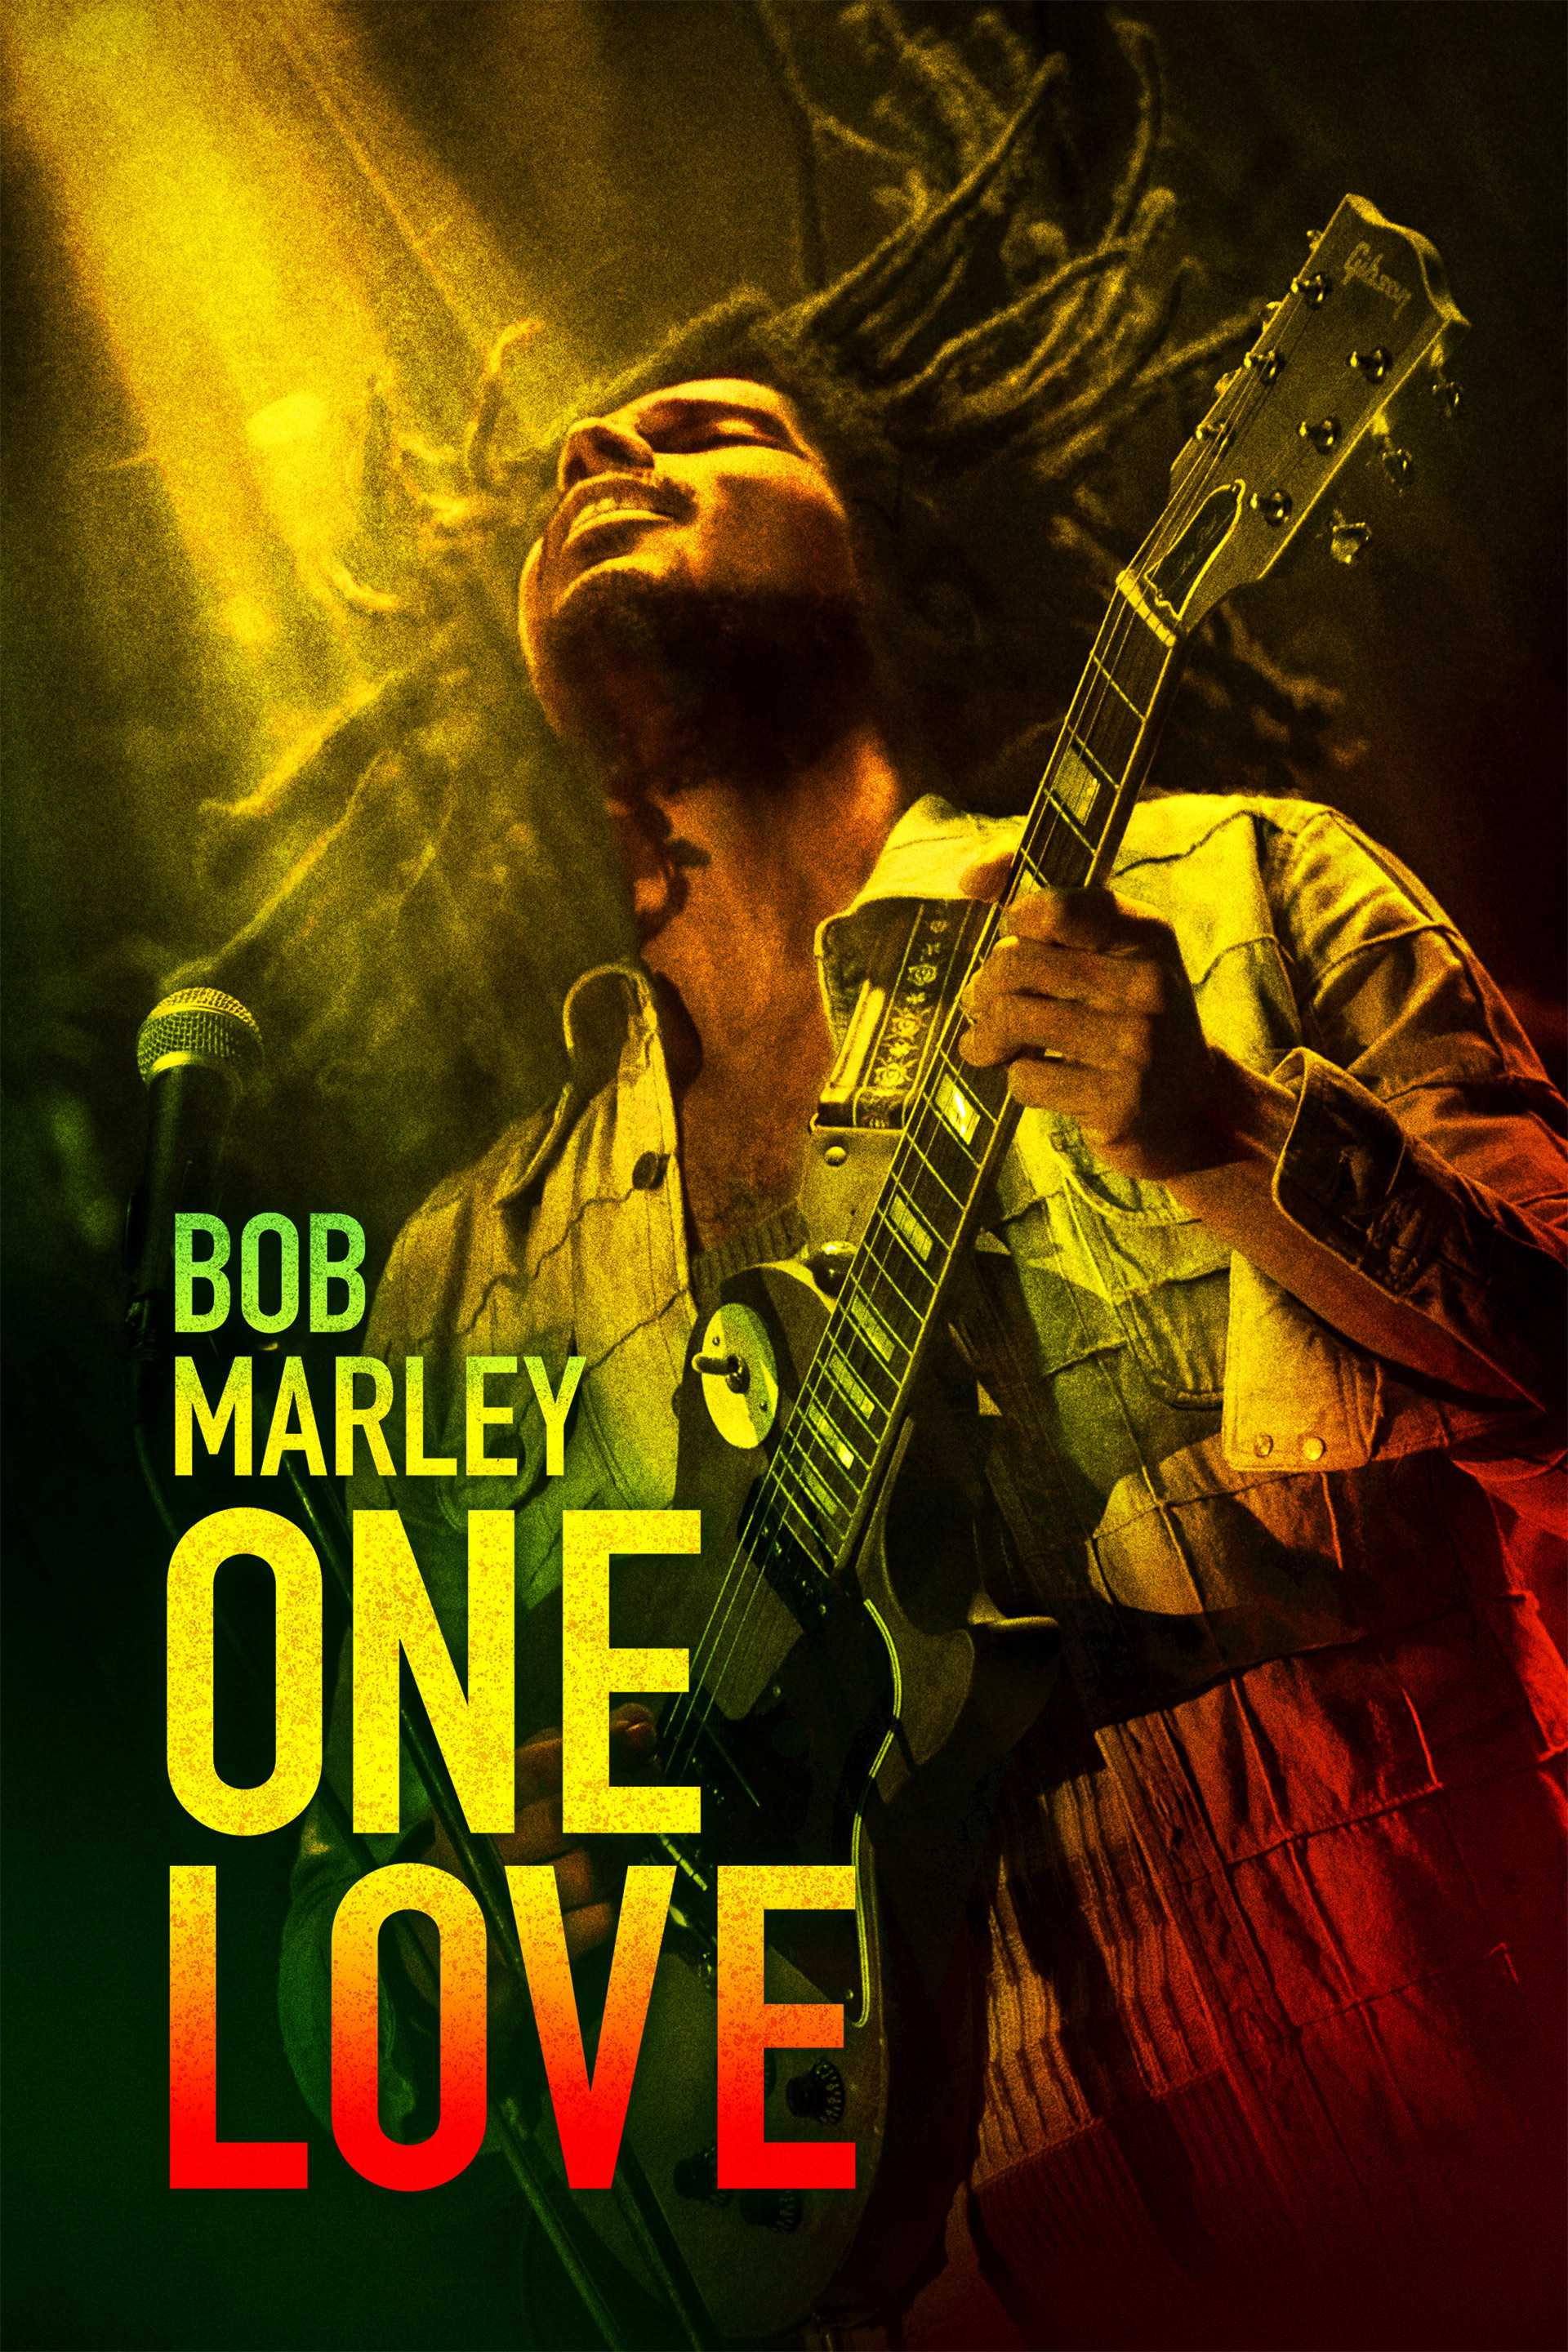 Bob Marley - One Love in streaming